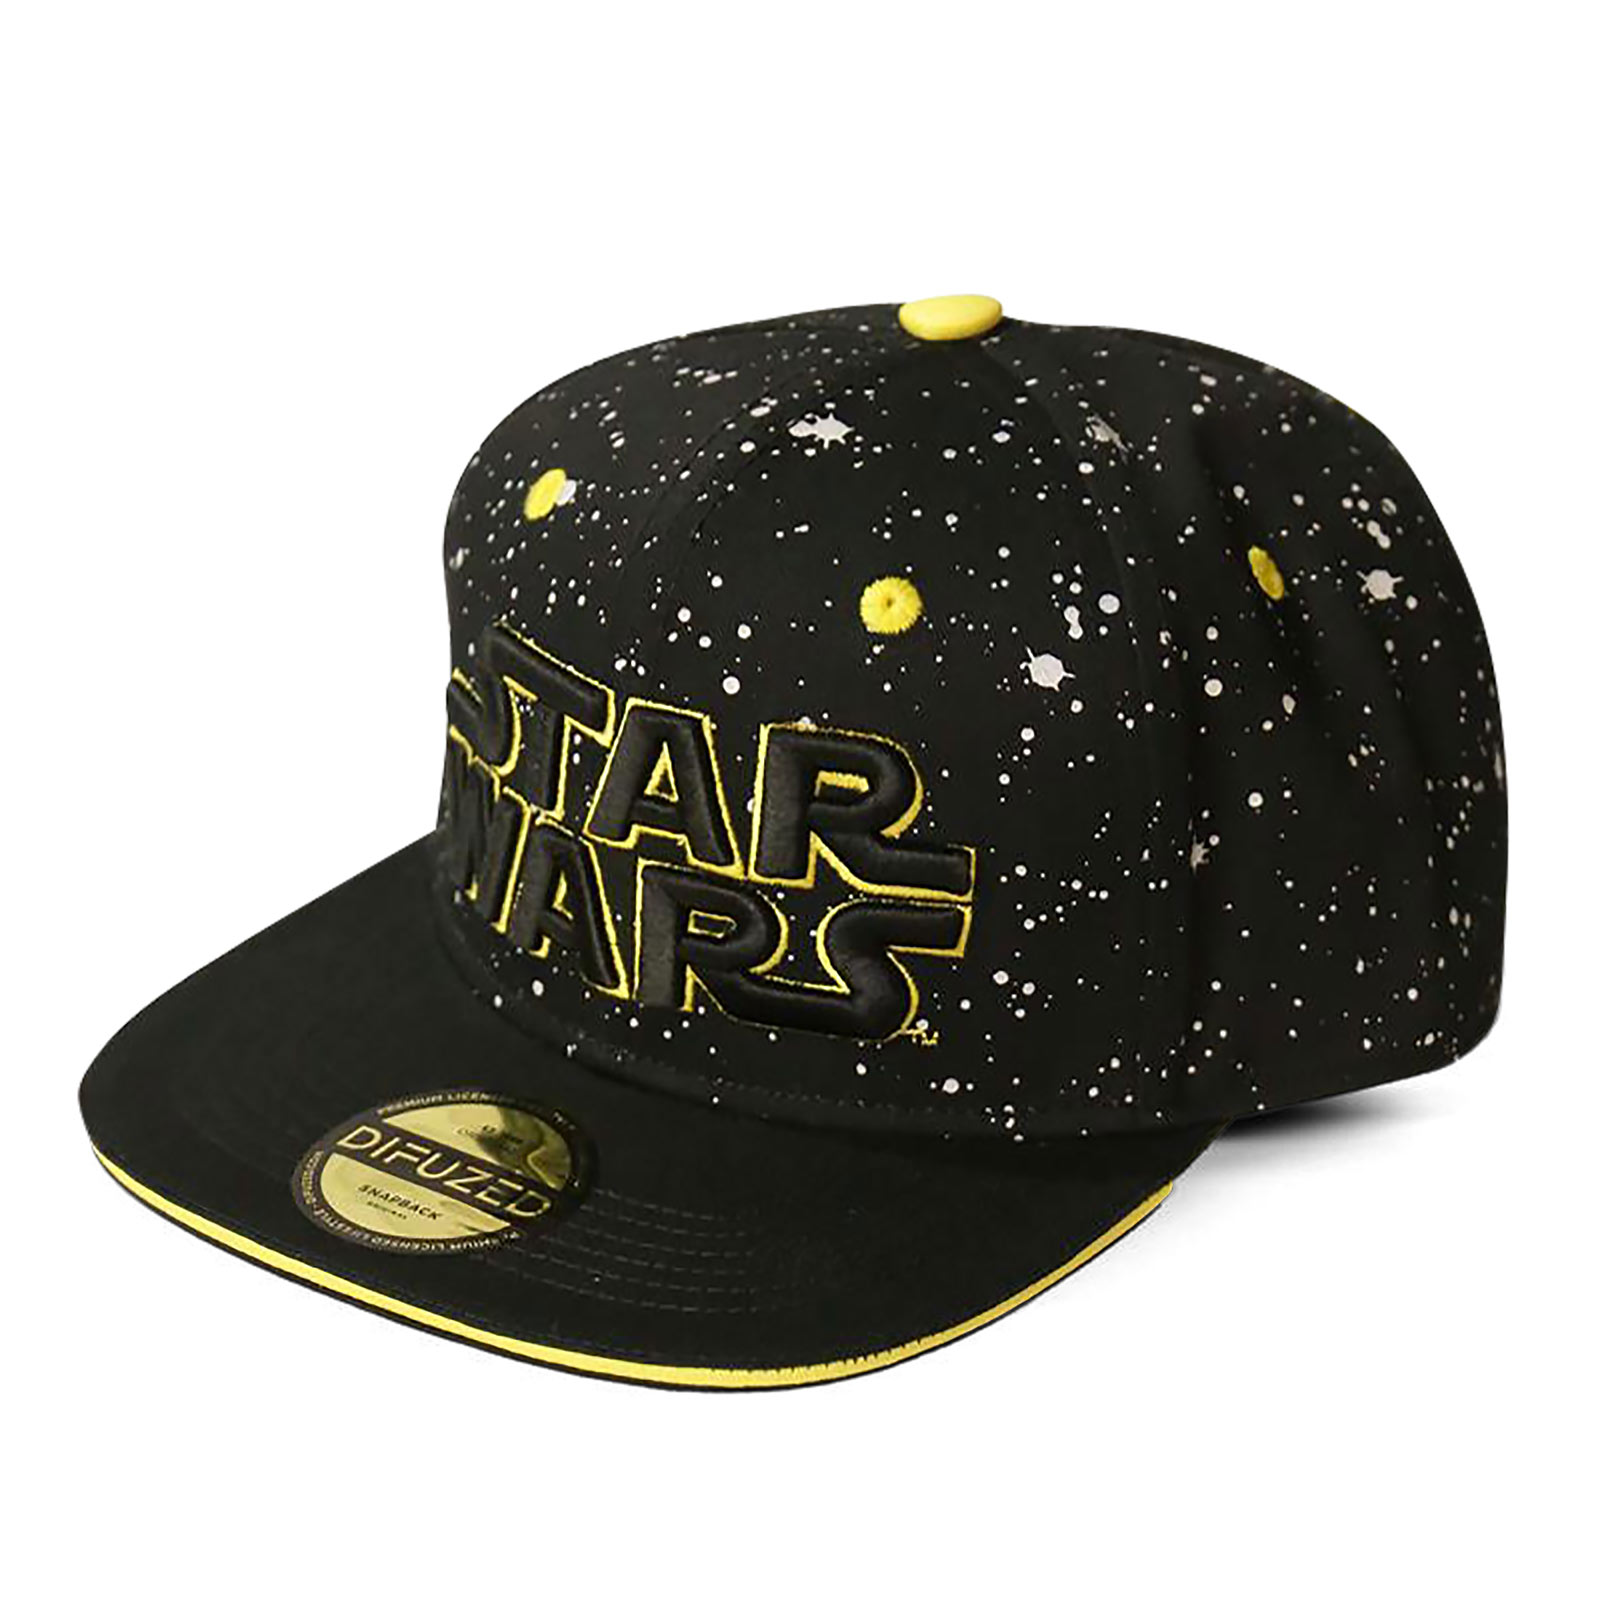 Star Wars - Galaxy Snapback Cap